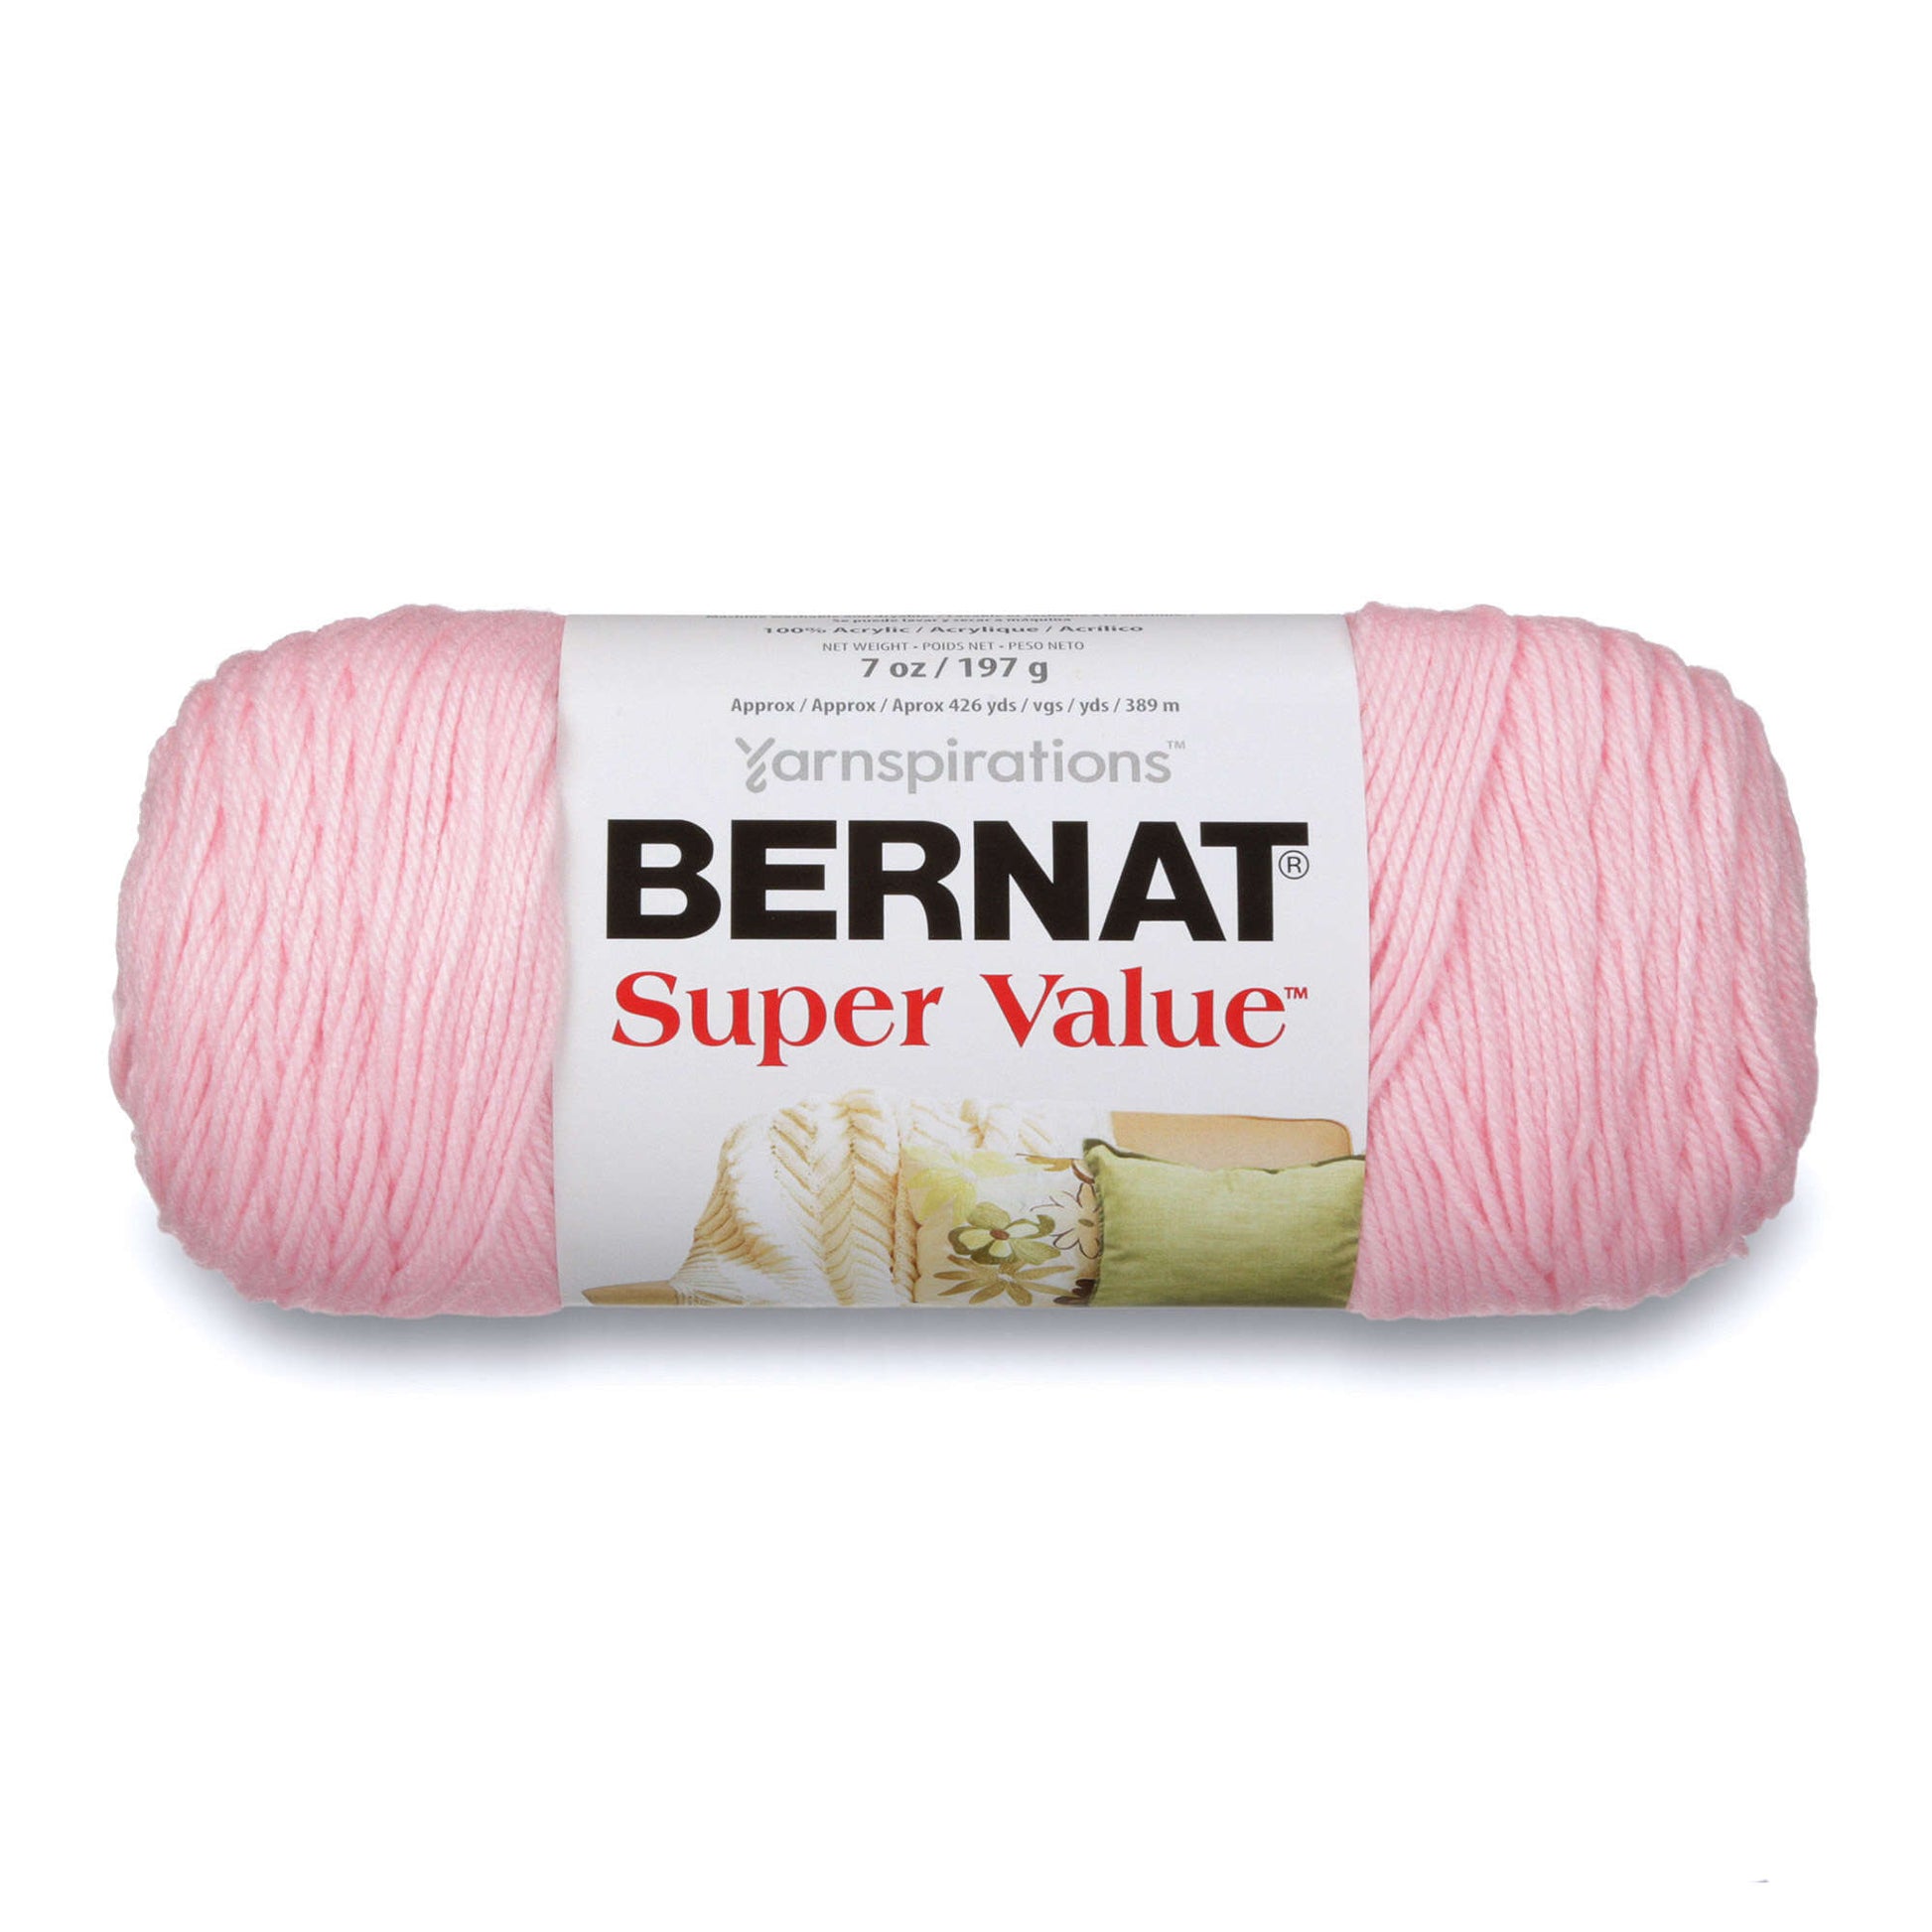 Bernat Super Value Yarn, 3 Pack, Dk Heather 3 Count